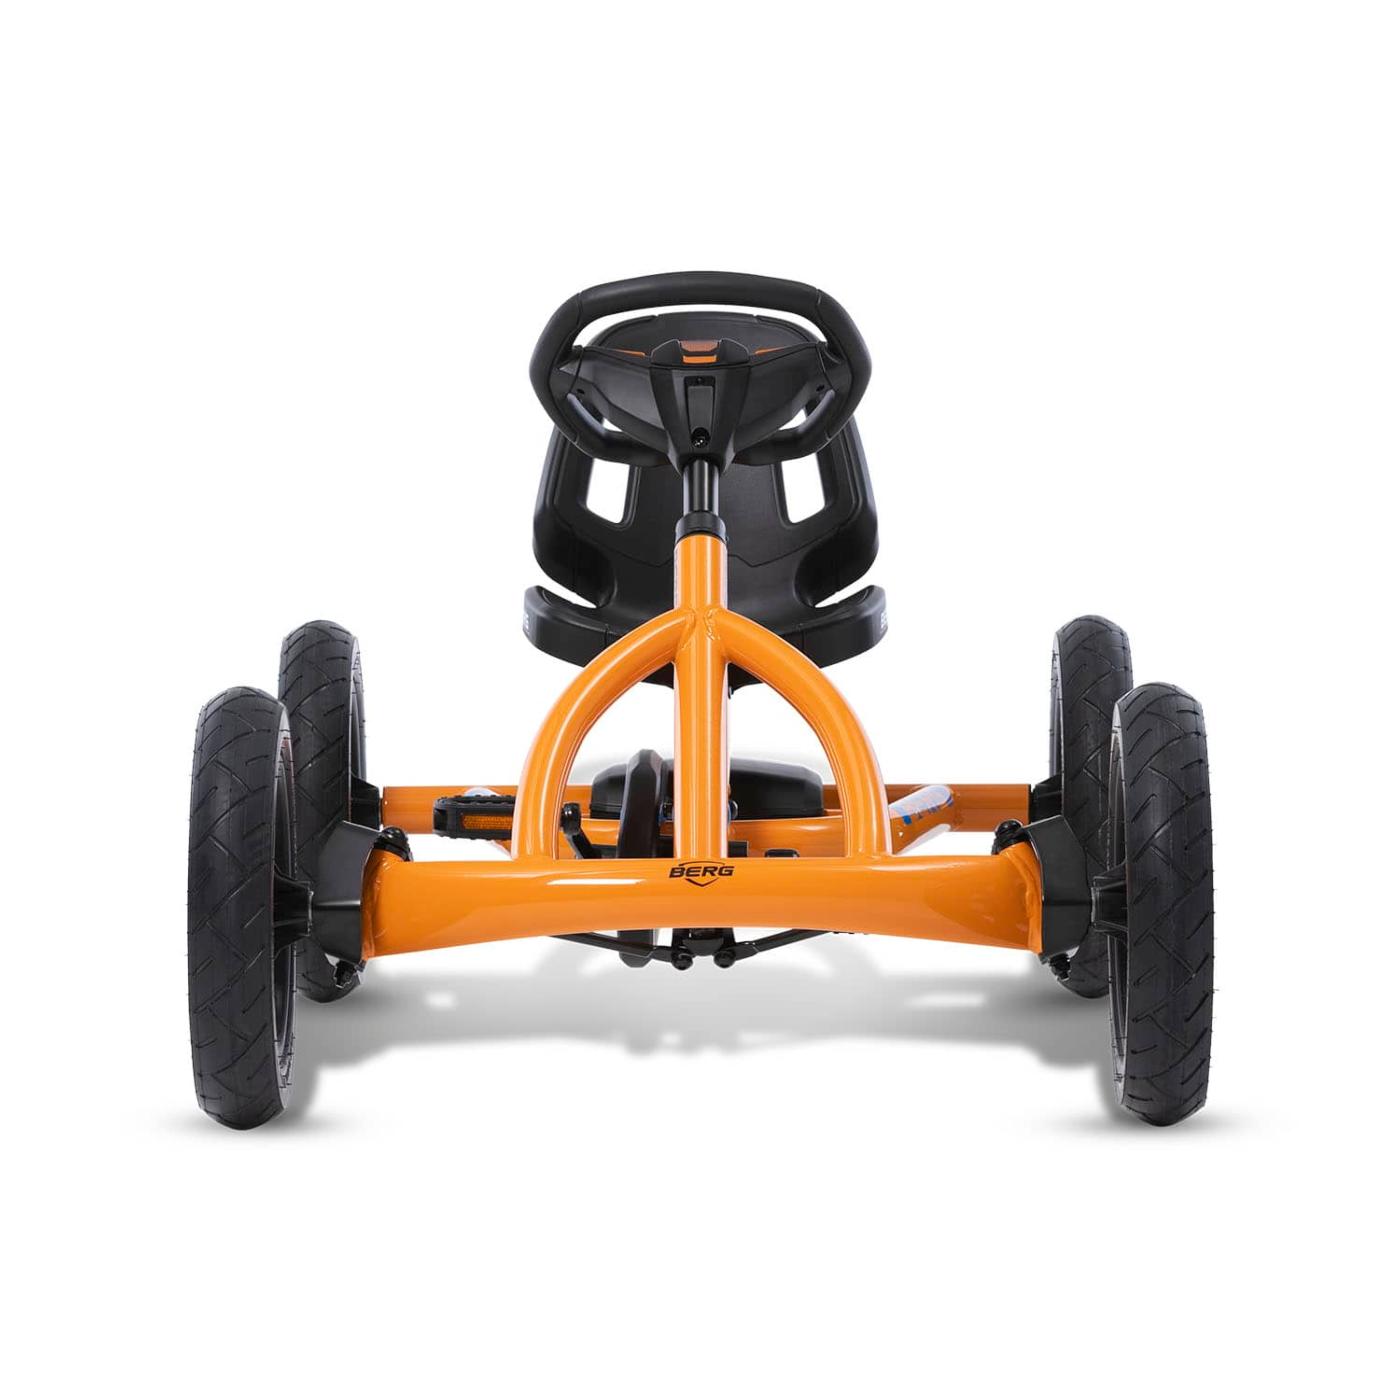 Cotxe de pedals BERG Buddy B-Orange taronja